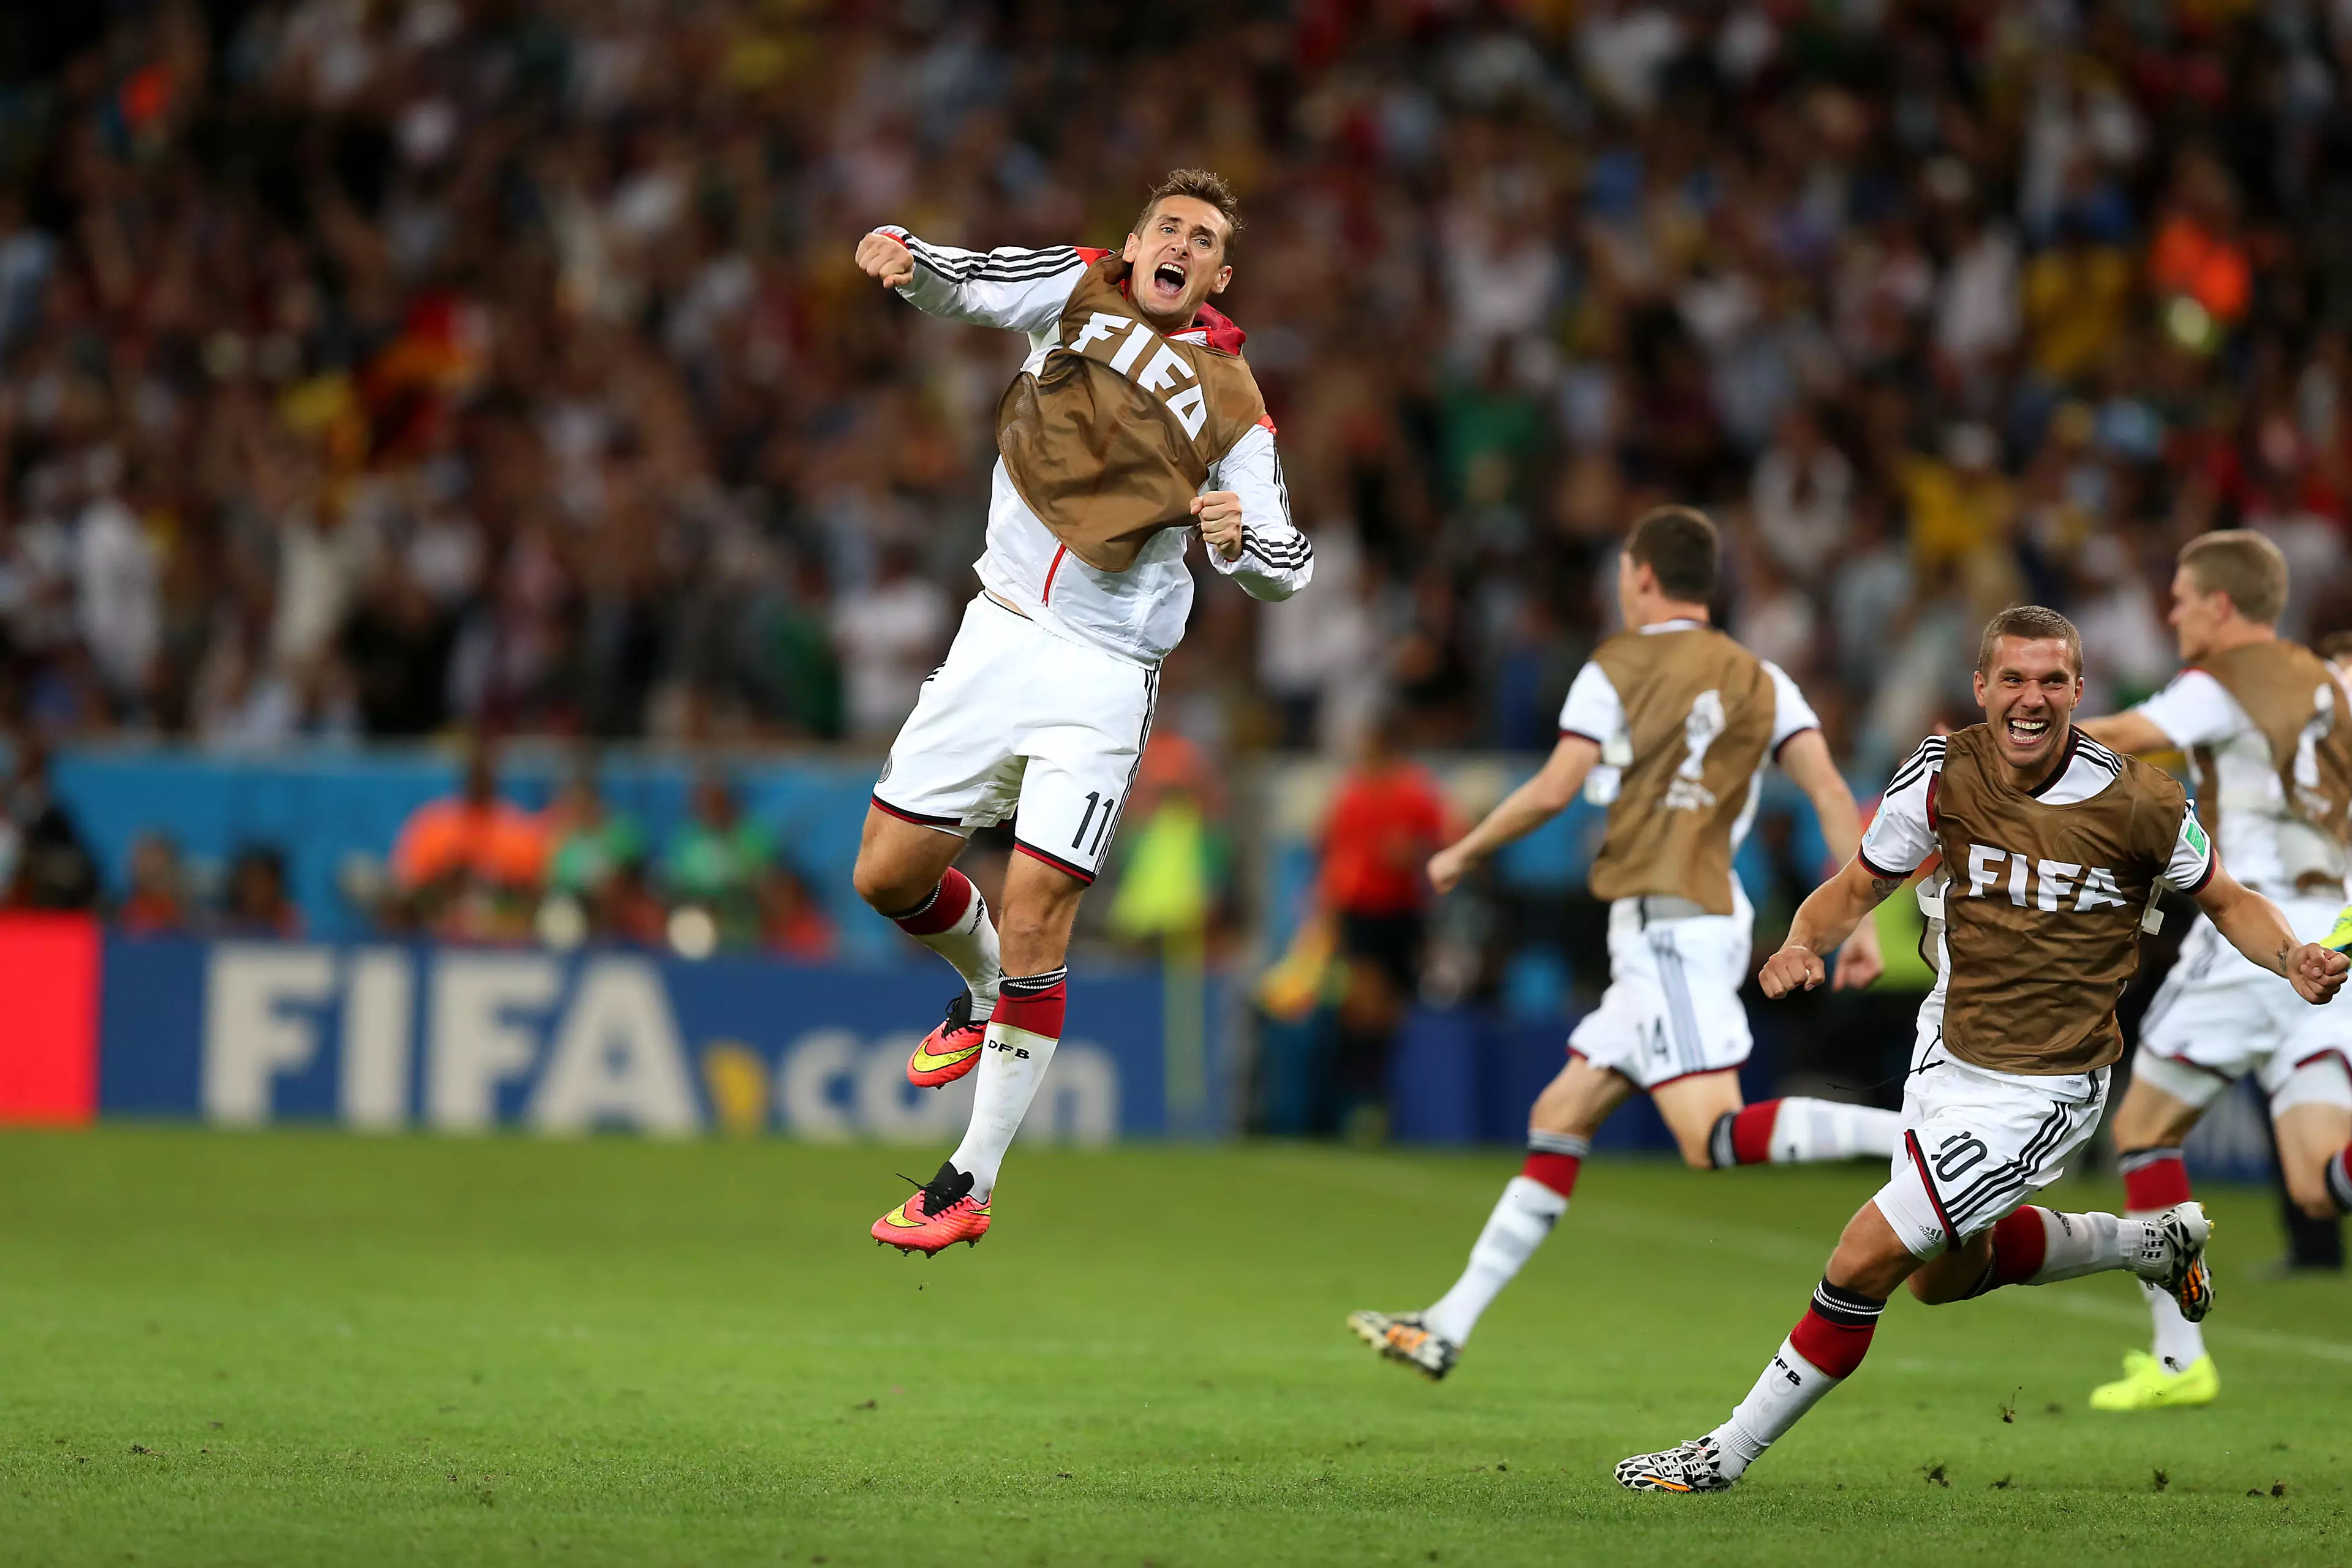 BREAKING: Germany Legend Miroslav Klose Retires From Football